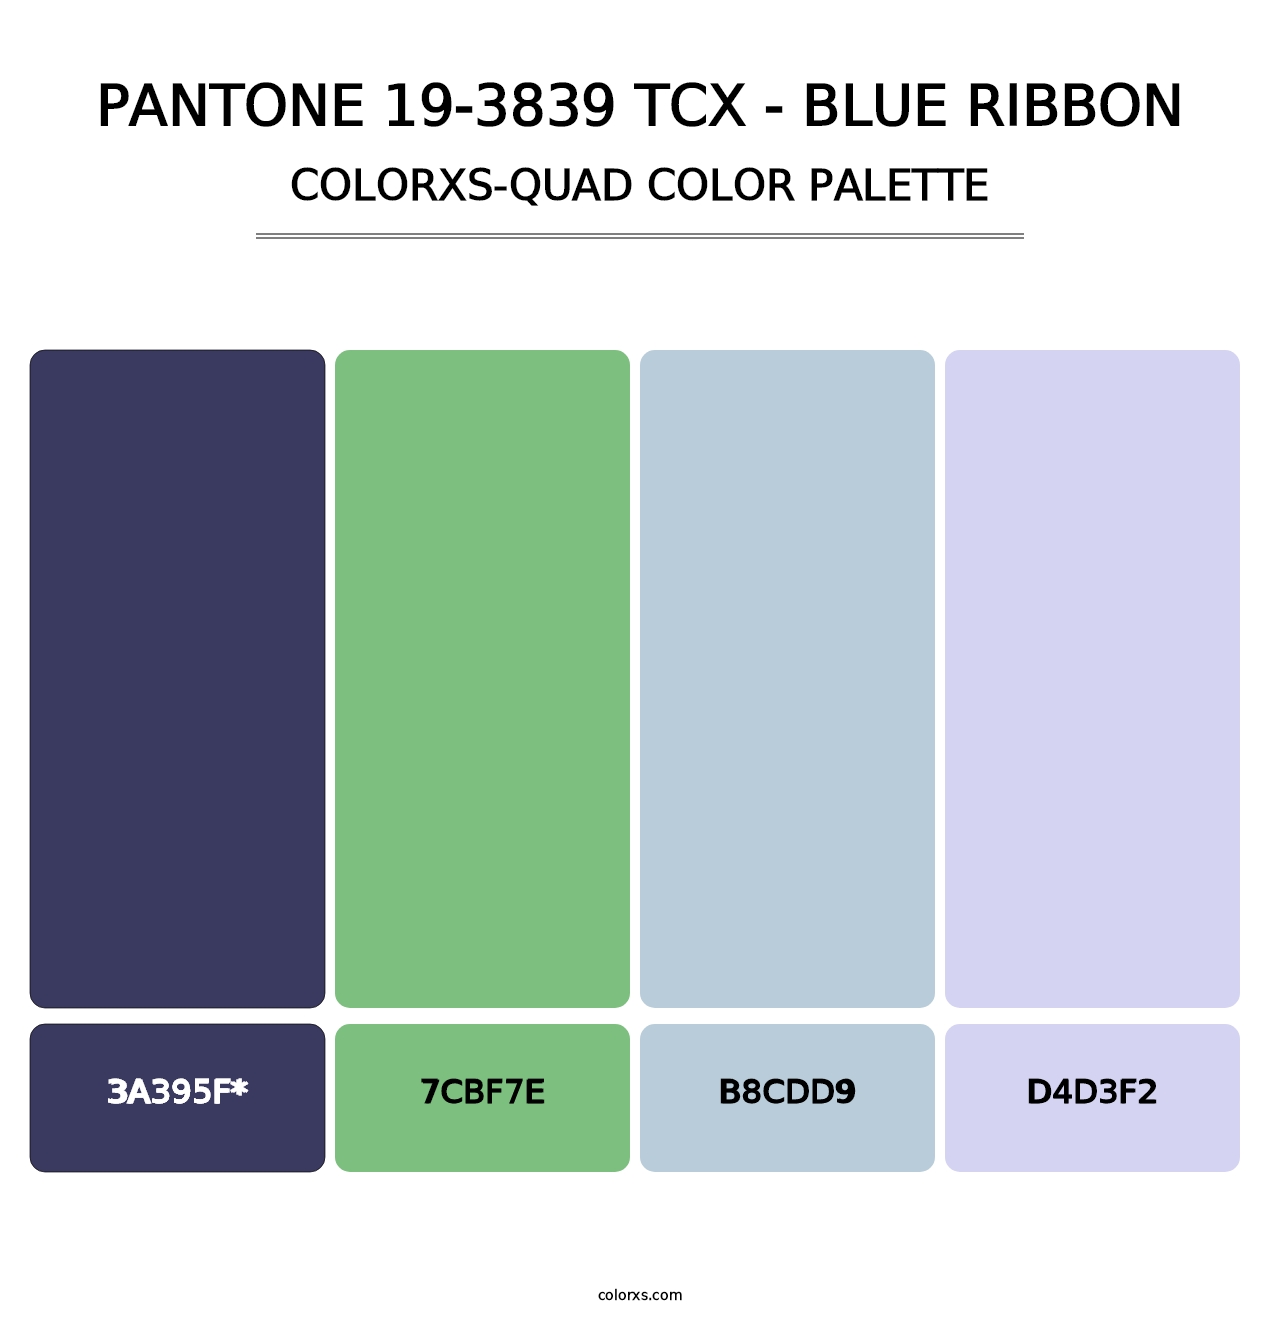 PANTONE 19-3839 TCX - Blue Ribbon - Colorxs Quad Palette